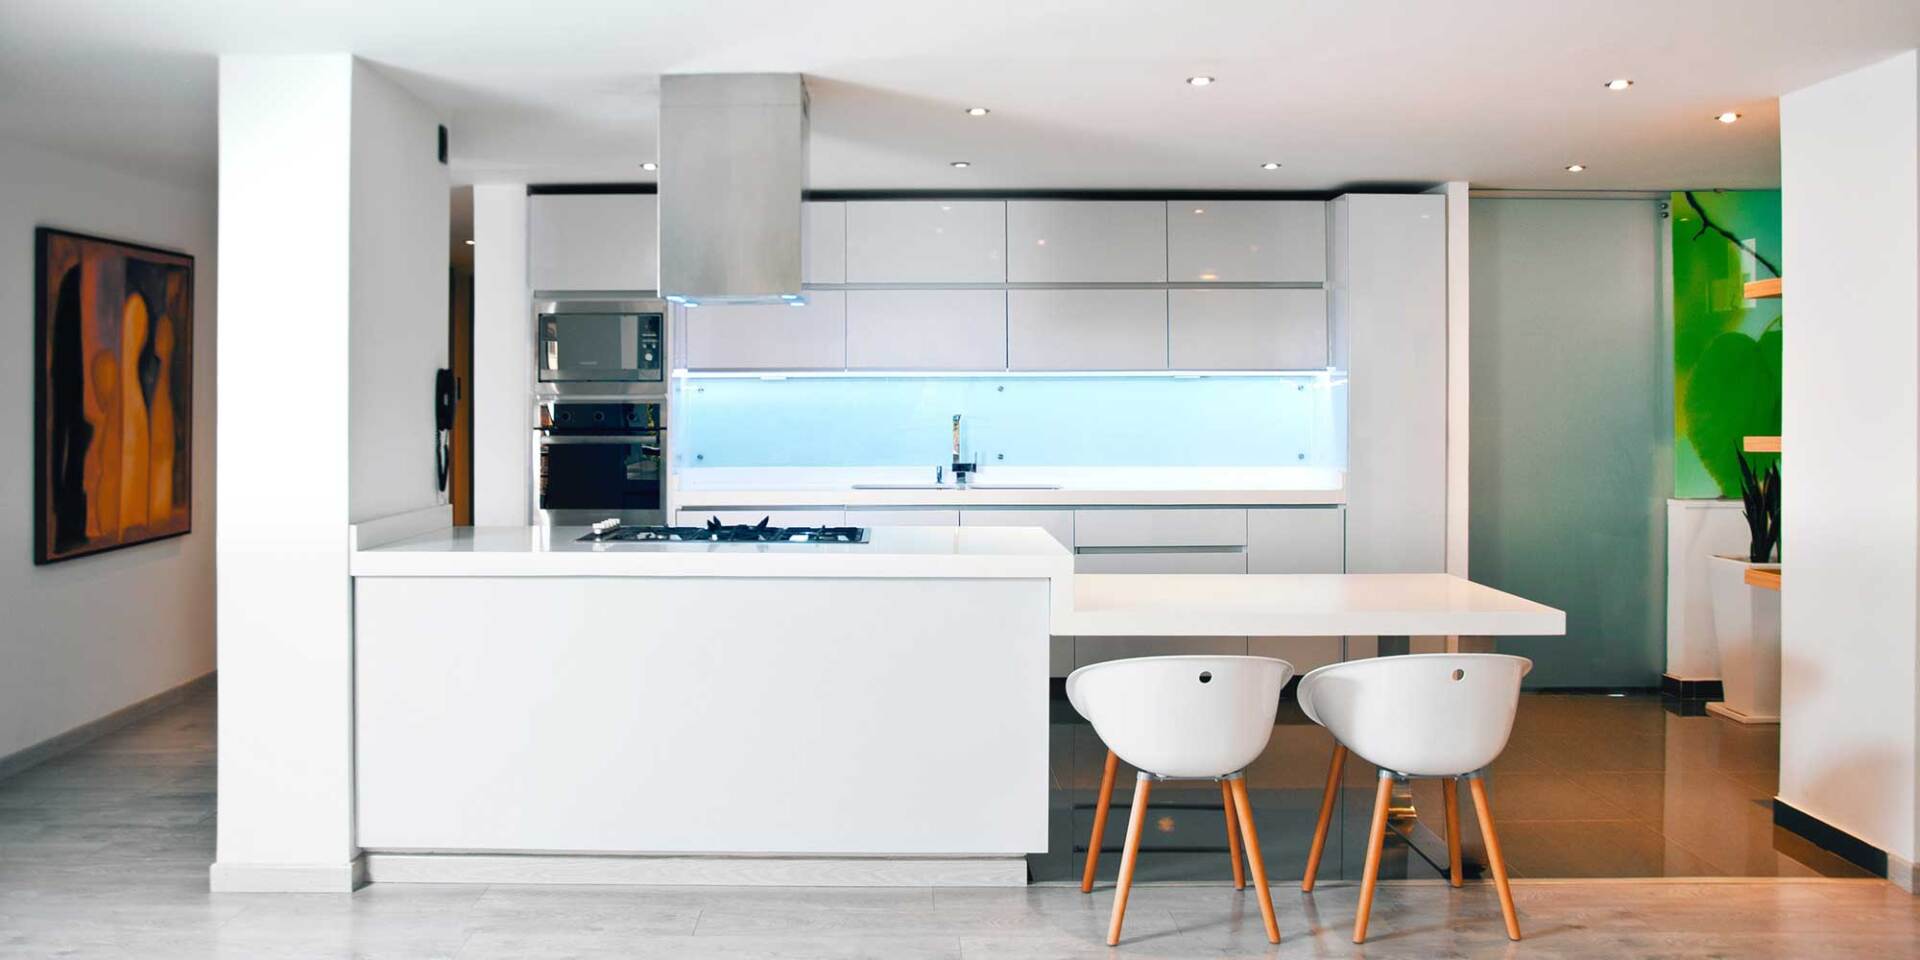 Slimline white kitchen with a blue glass backsplash